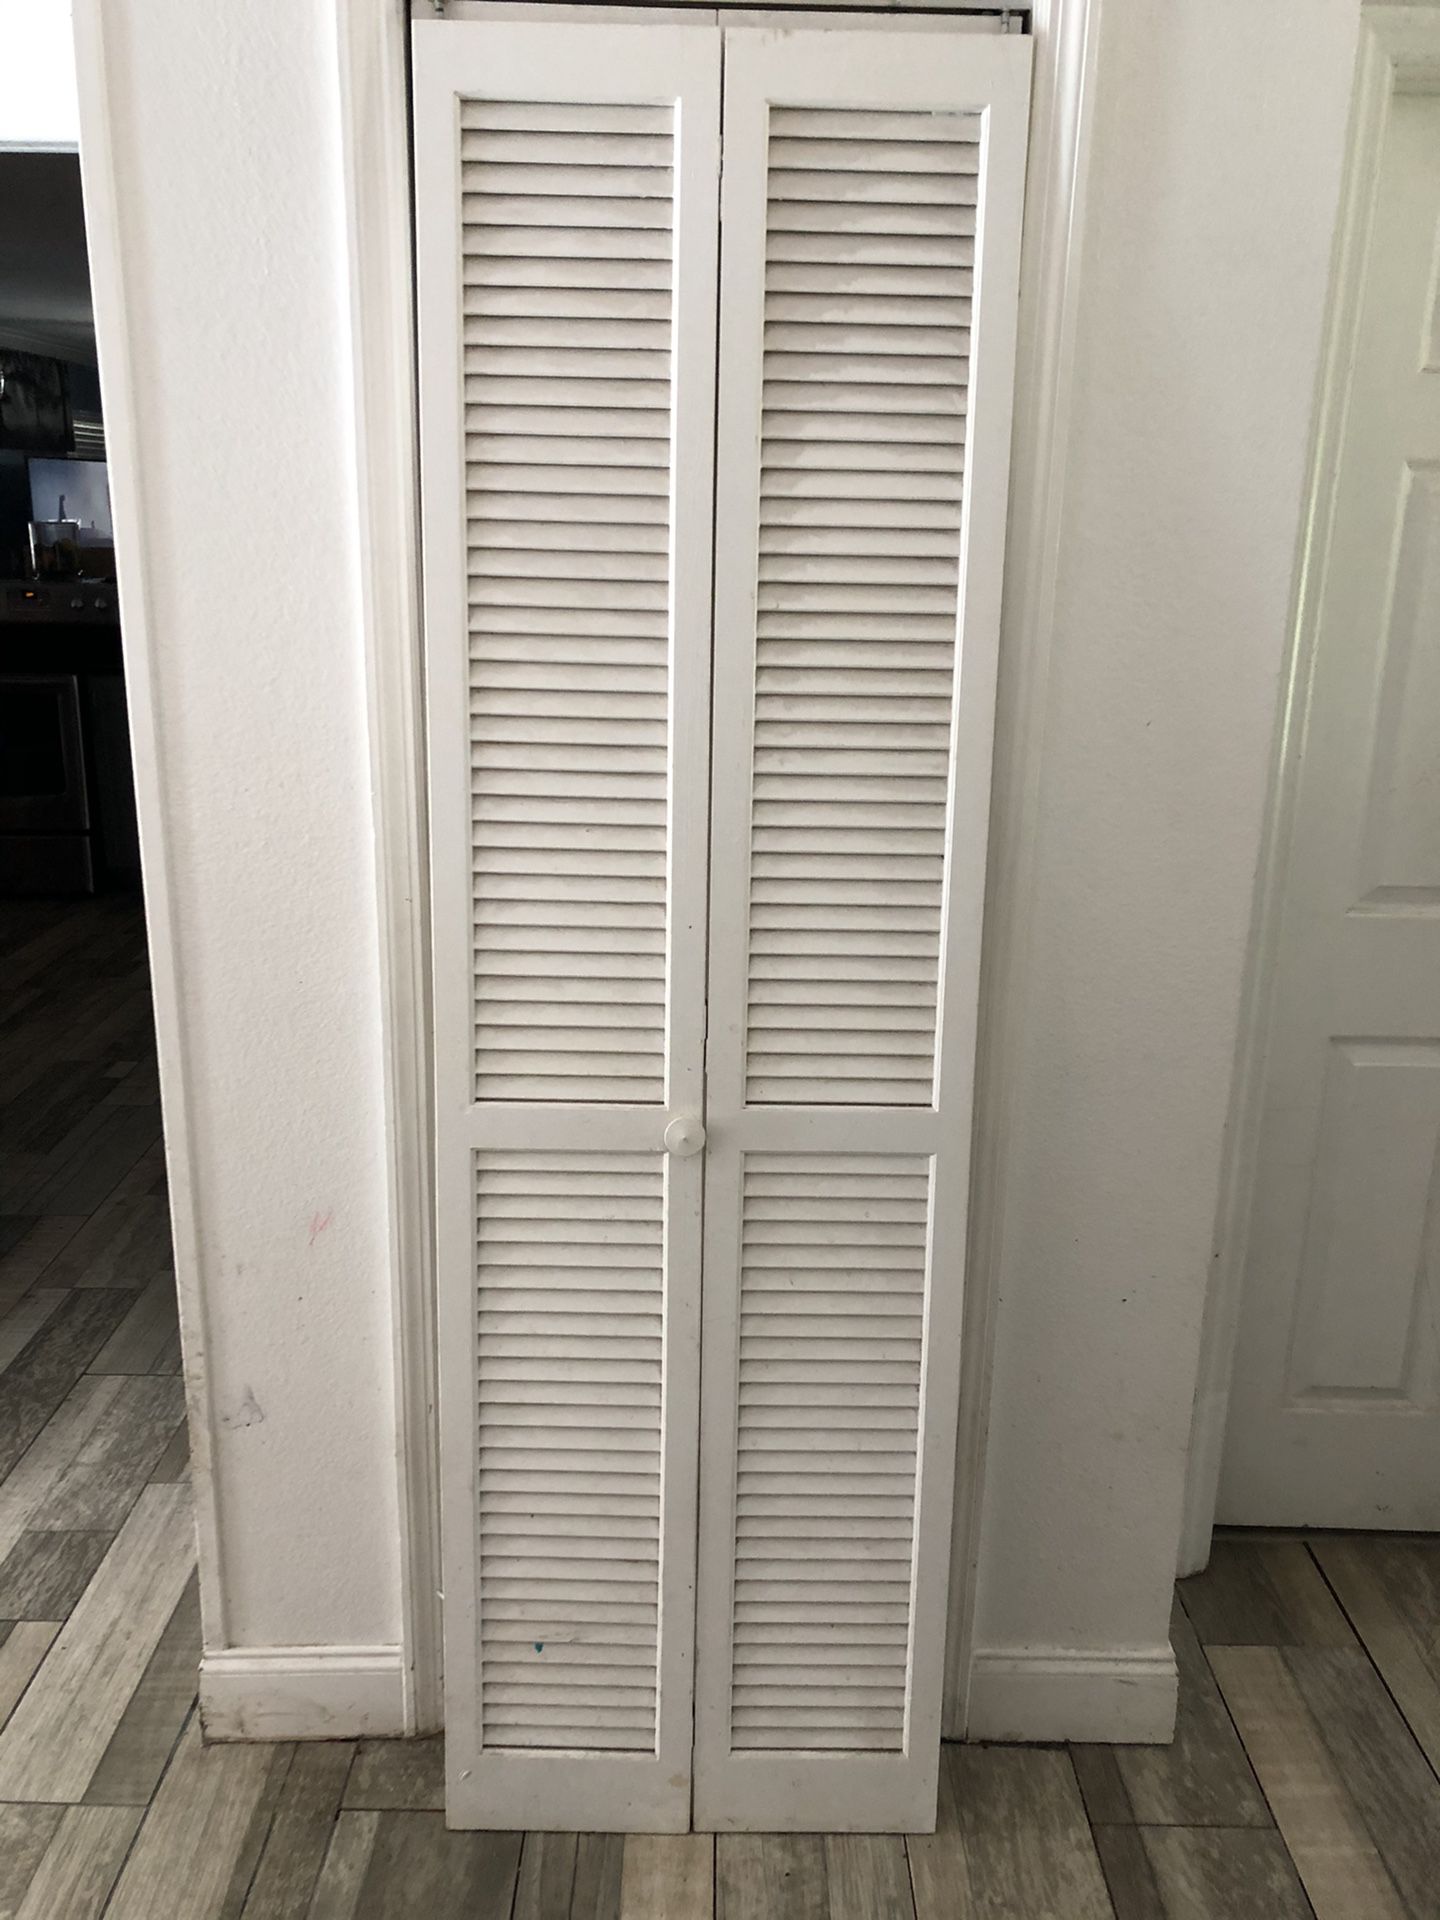 2 bi fold closet doors 24” wide